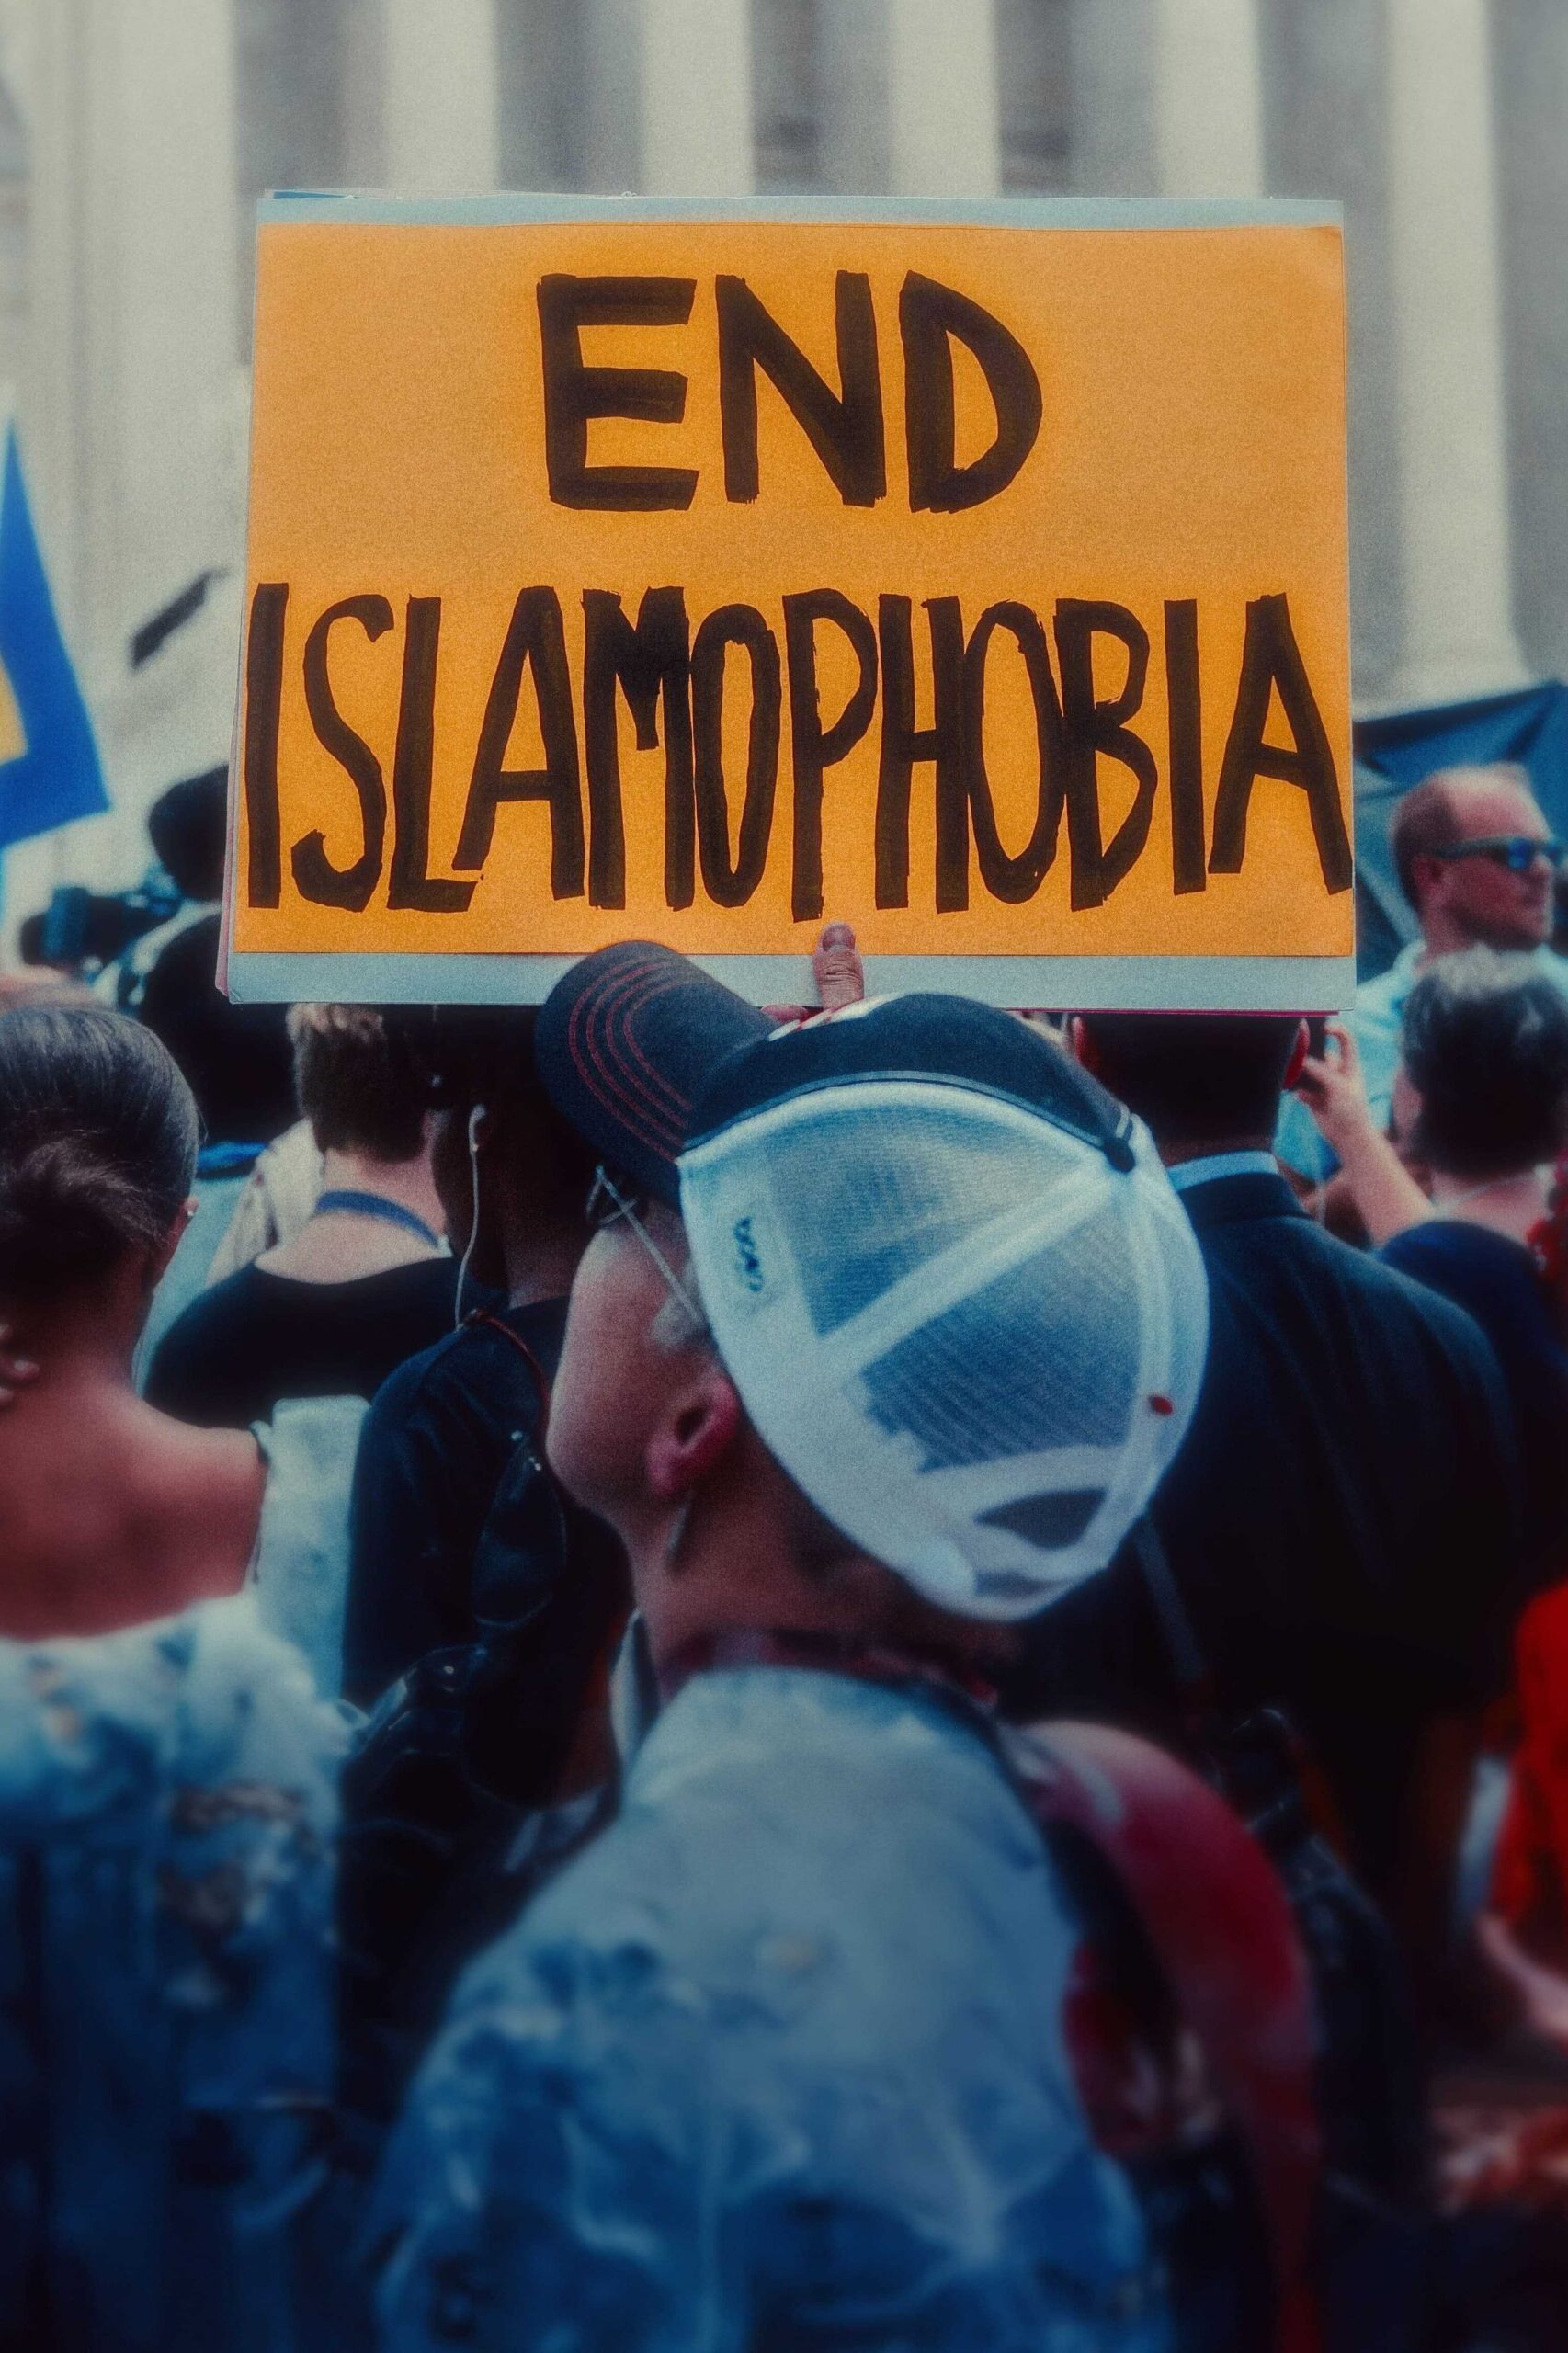 End Islamaphobia